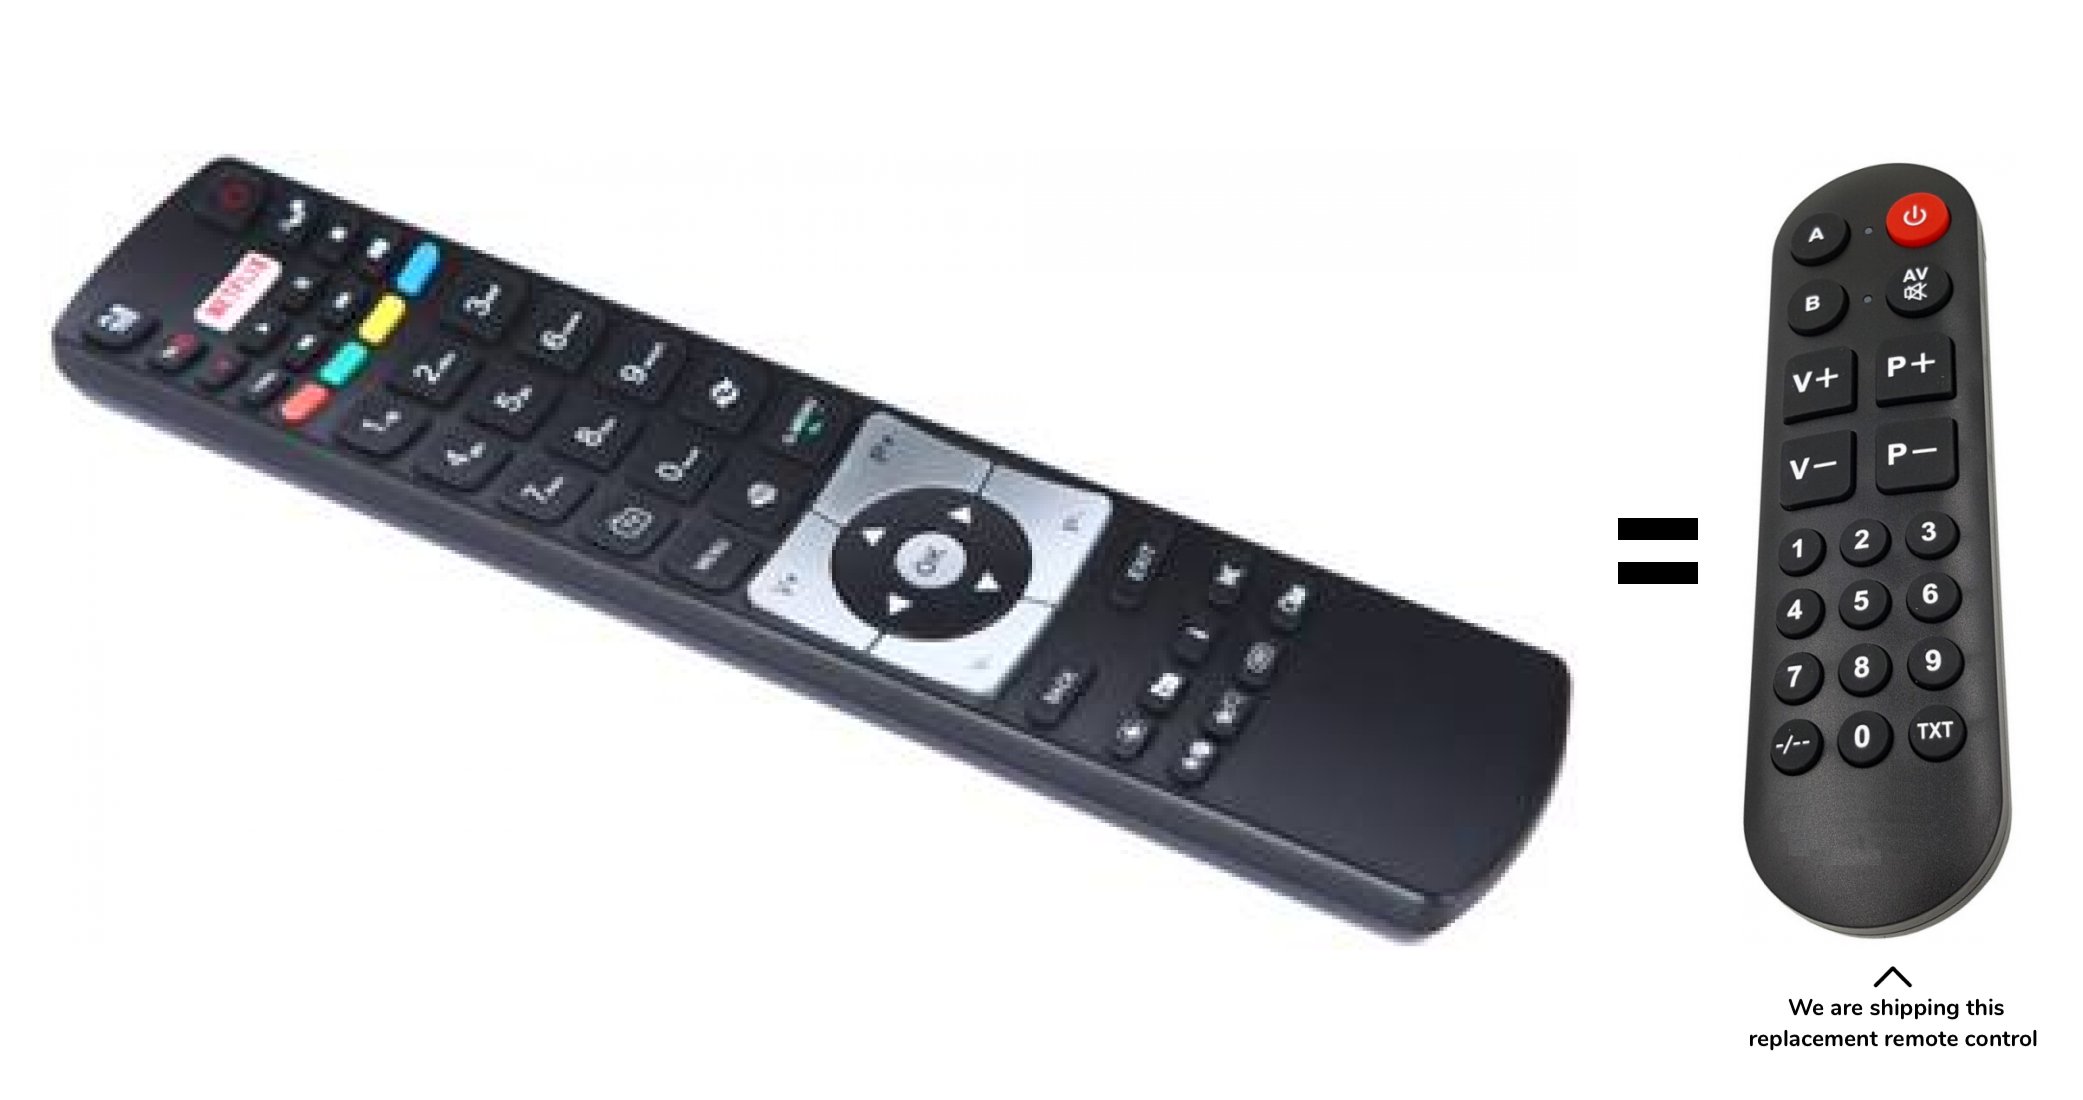 Gogen TVF22N384STWEB remote control for seniors